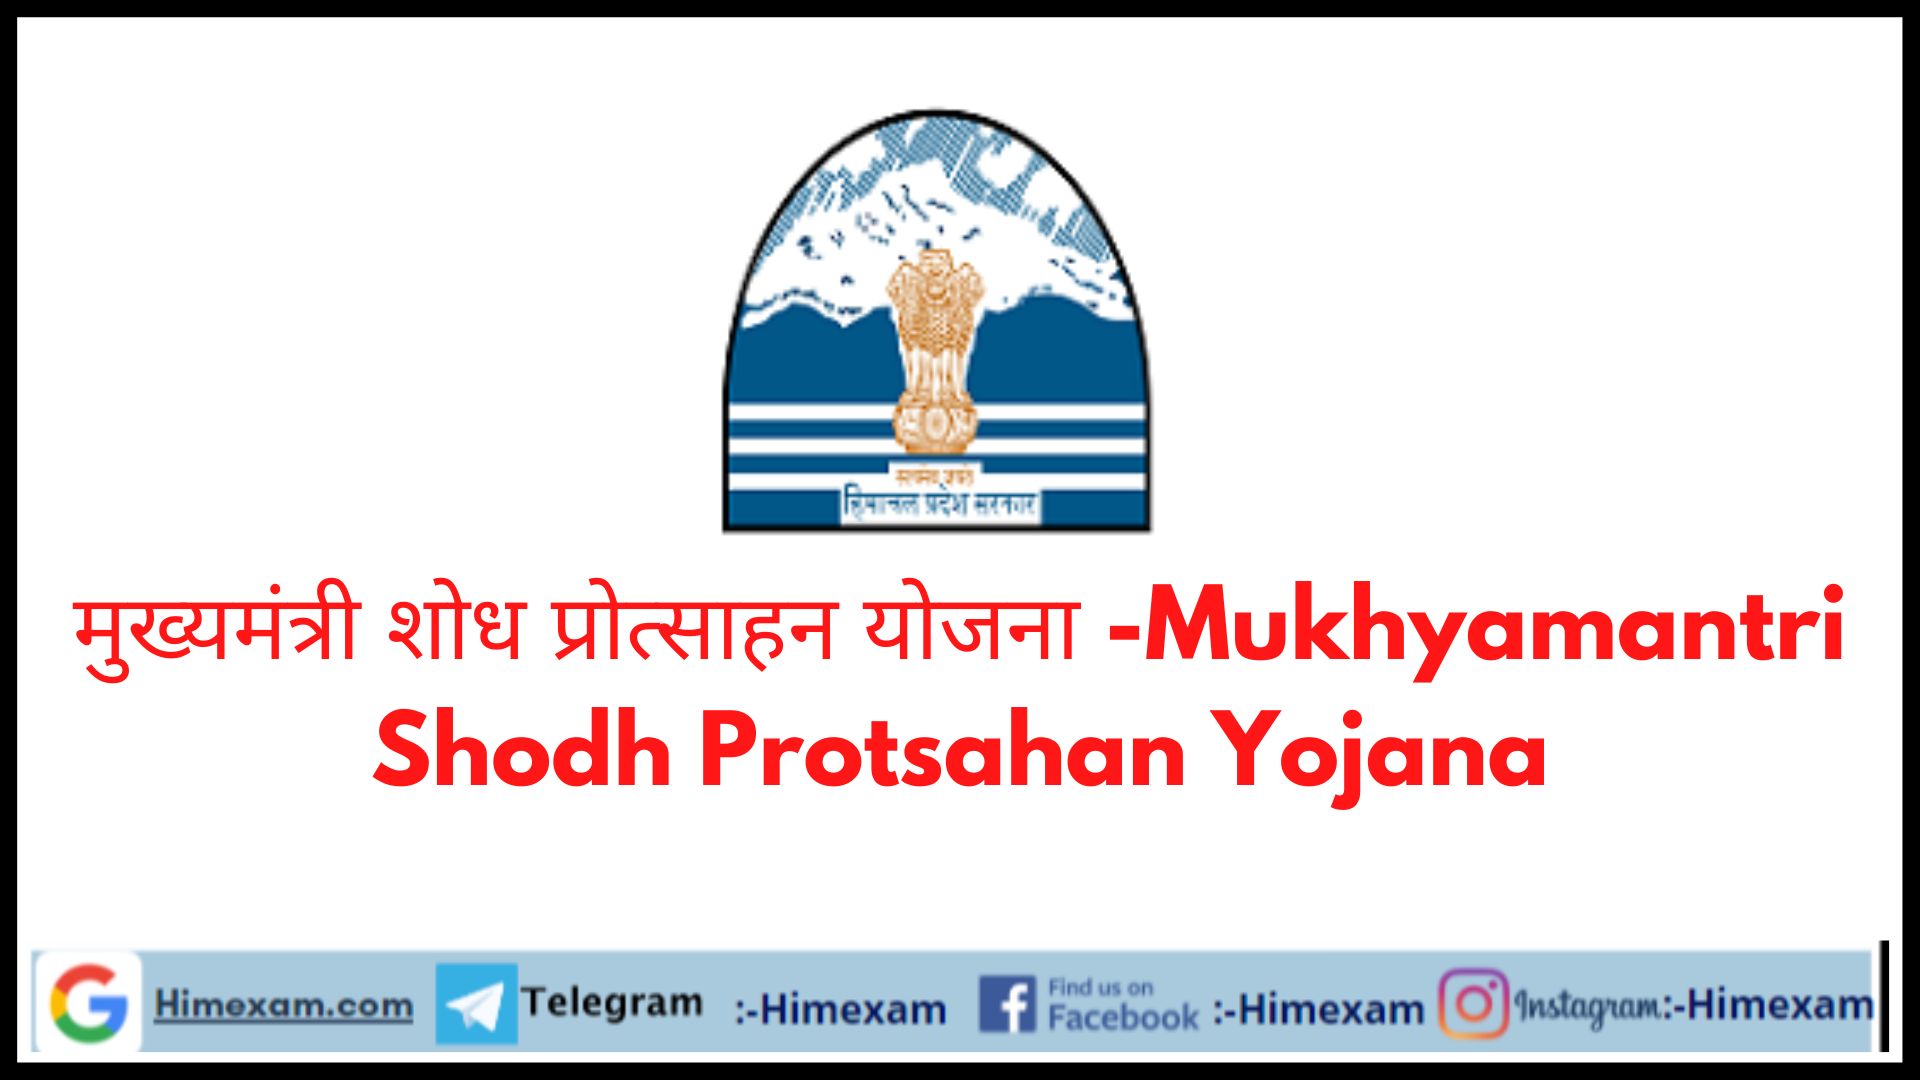 मुख्यमंत्री शोध प्रोत्साहन योजना -Mukhyamantri Shodh Protsahan Yojana